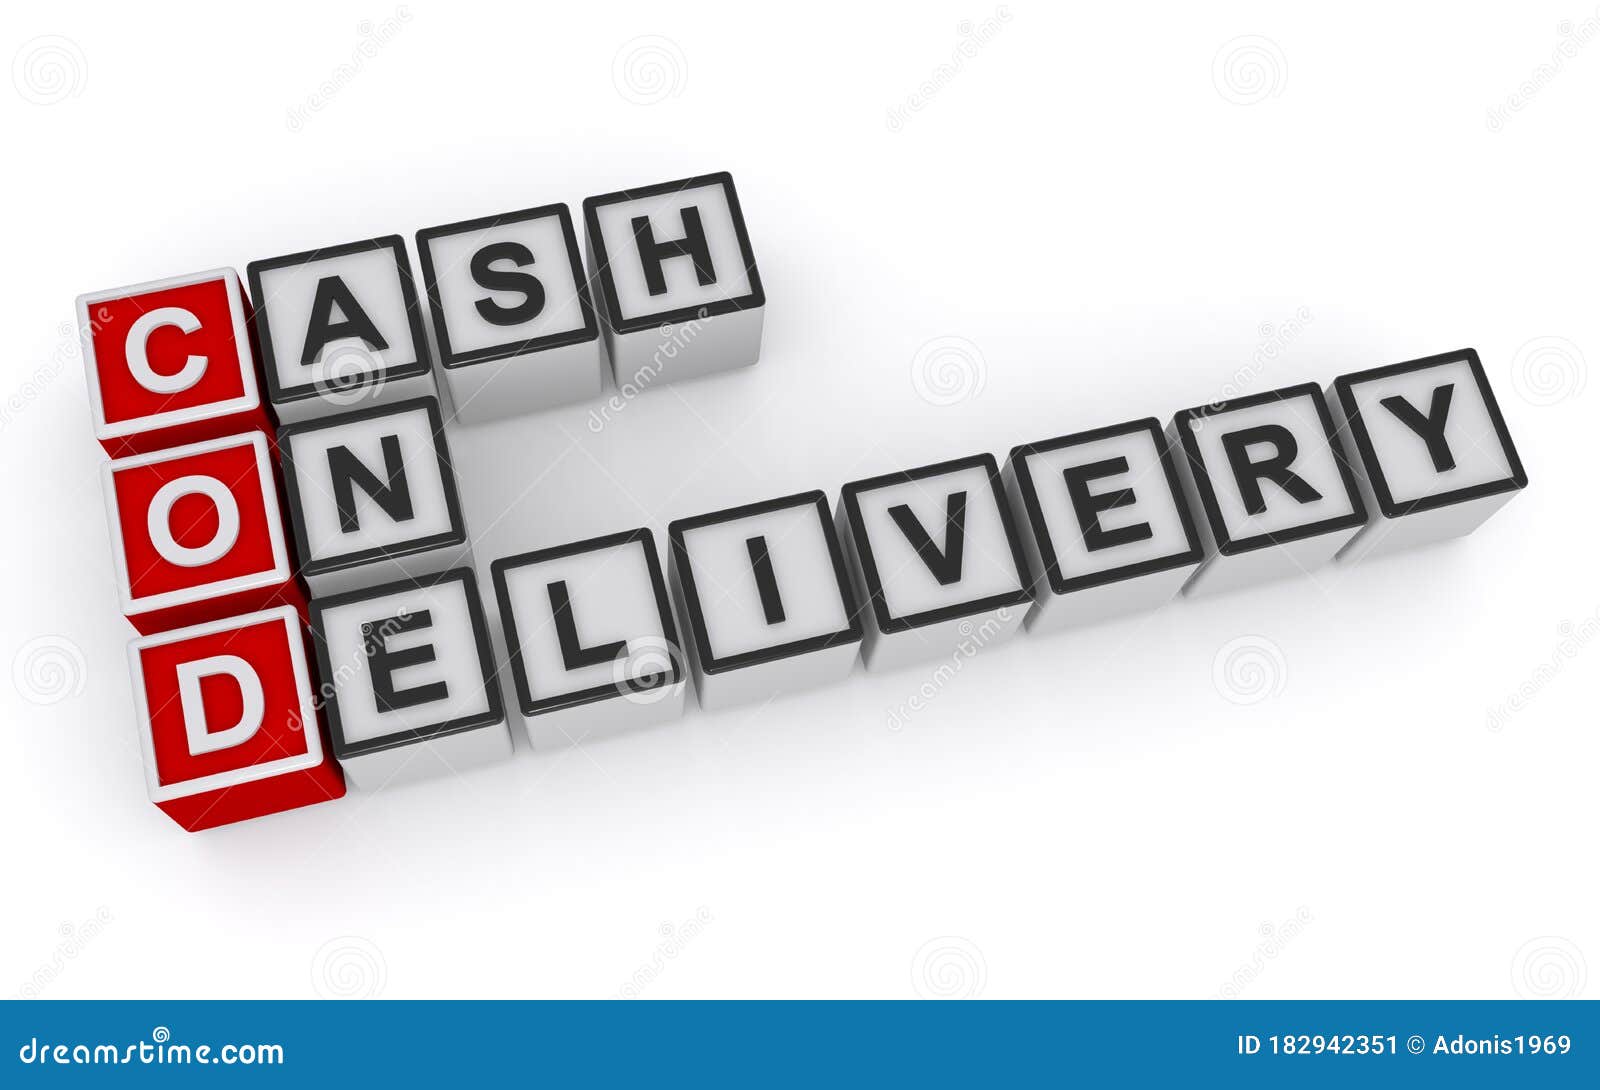 Cash on Delivery Word Blocks Stock Illustration - Illustration of online,  delivery: 182942351